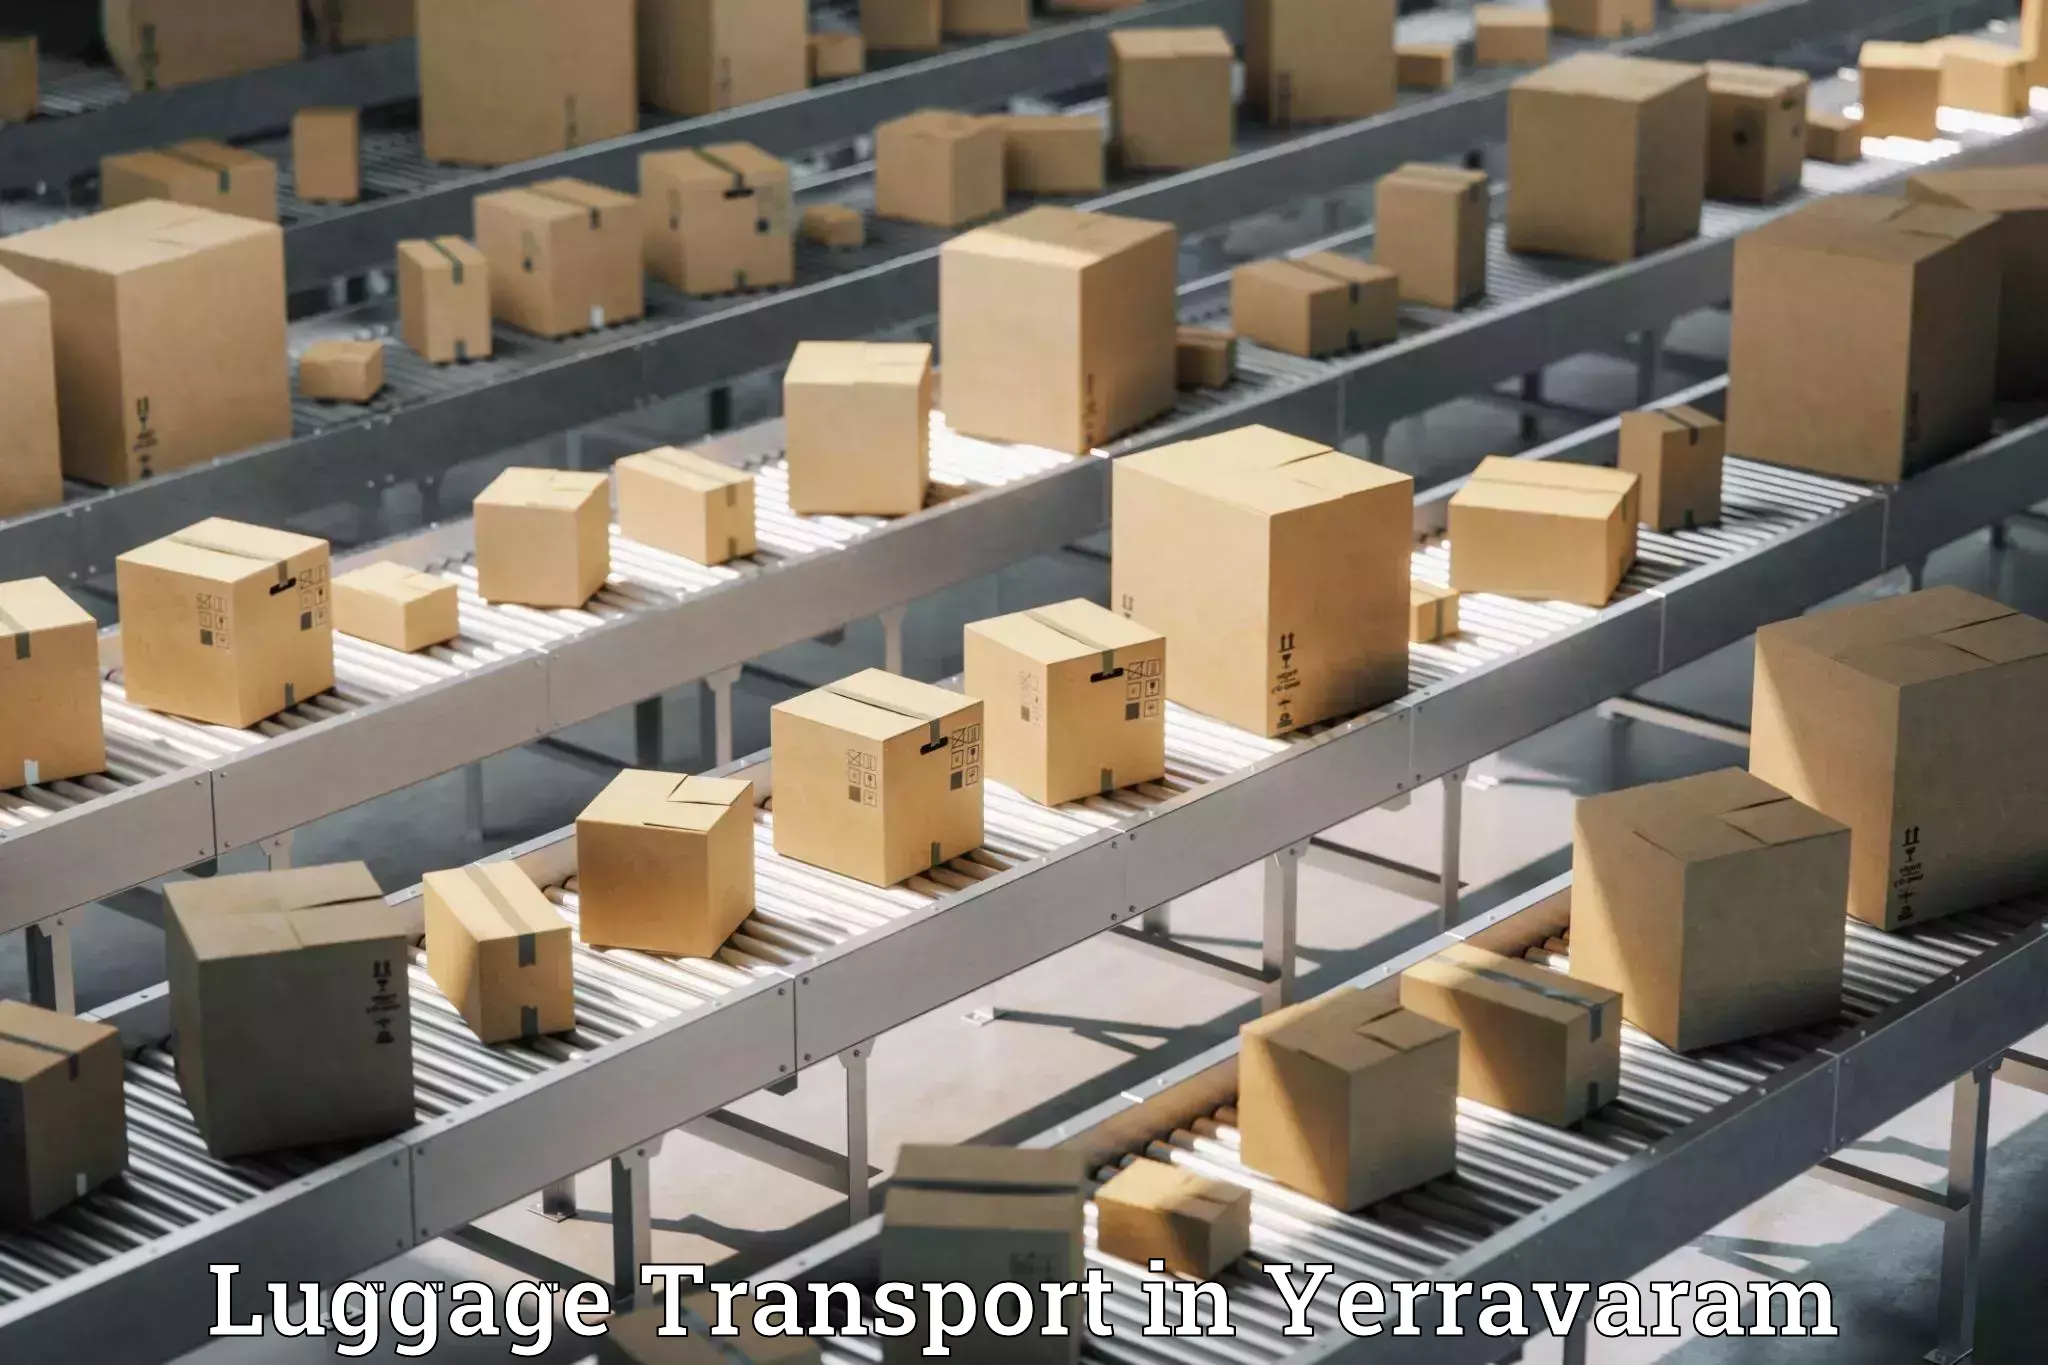 Holiday baggage shipping in Yerravaram